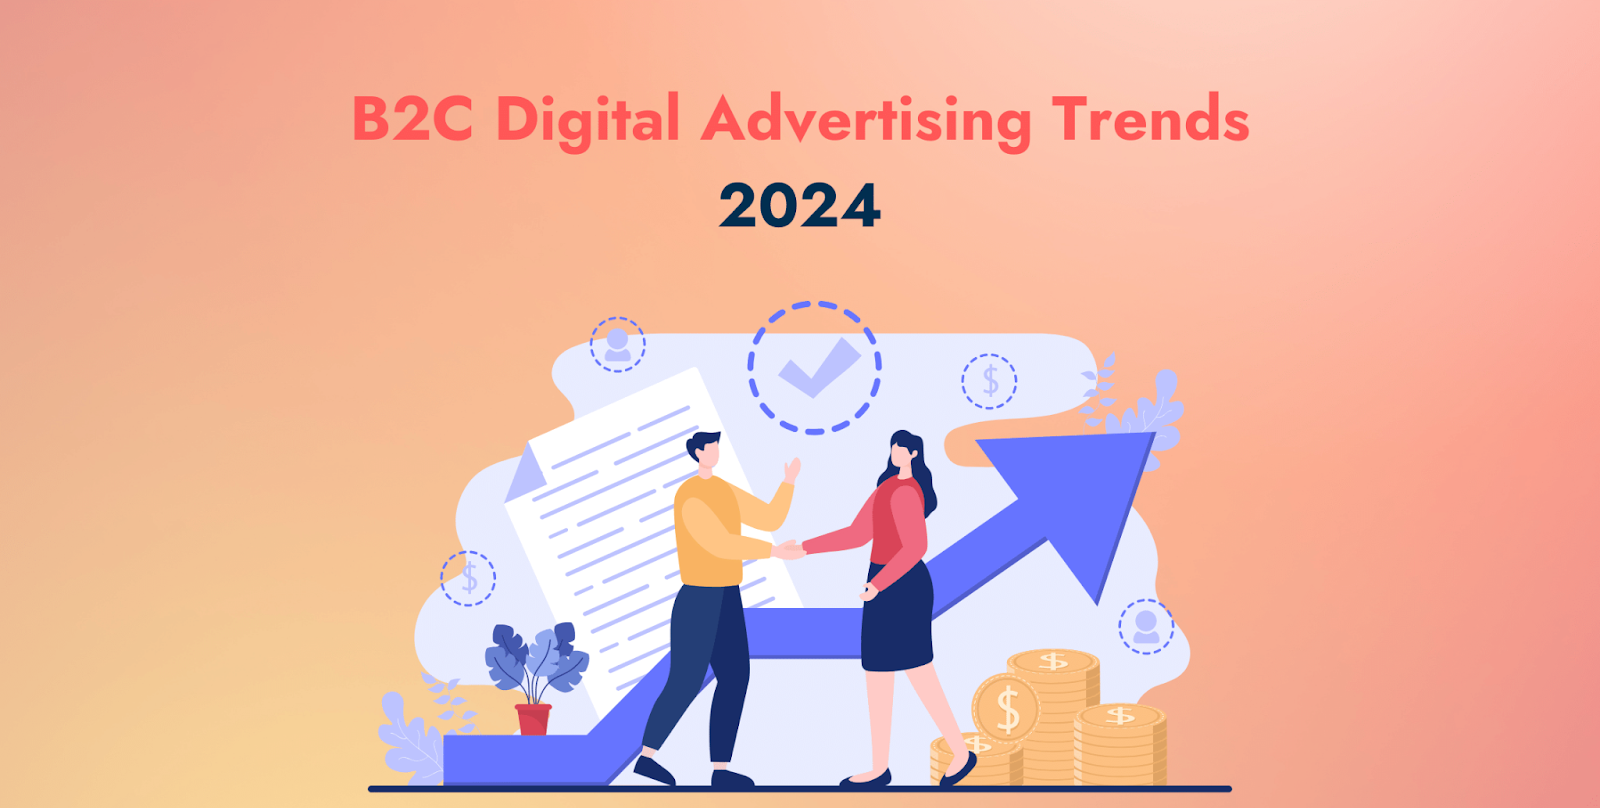 B2C Digital Advertising Trends 2024: